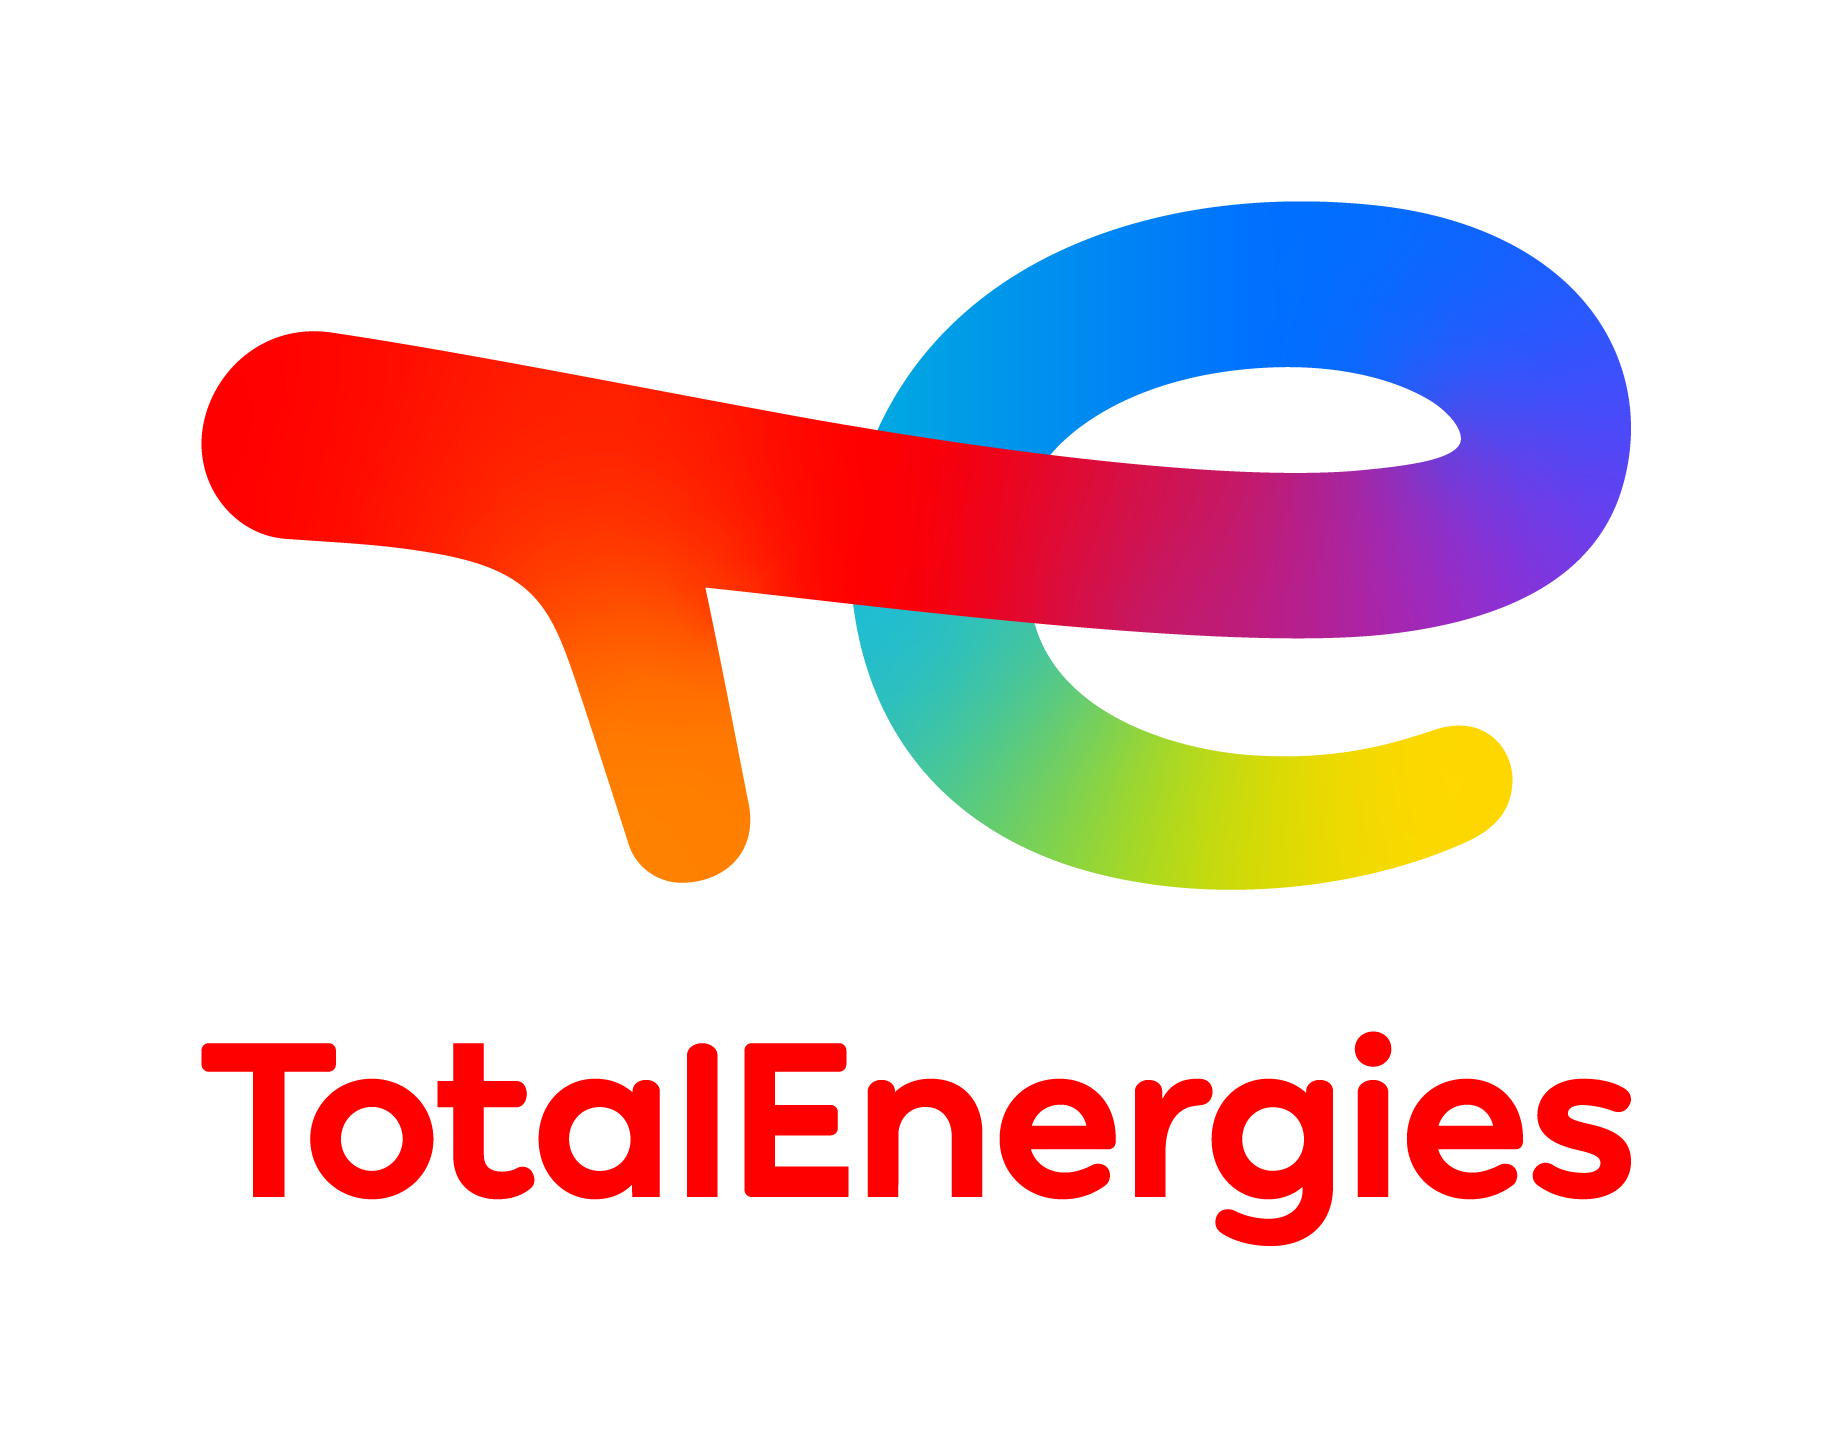 Total enegies